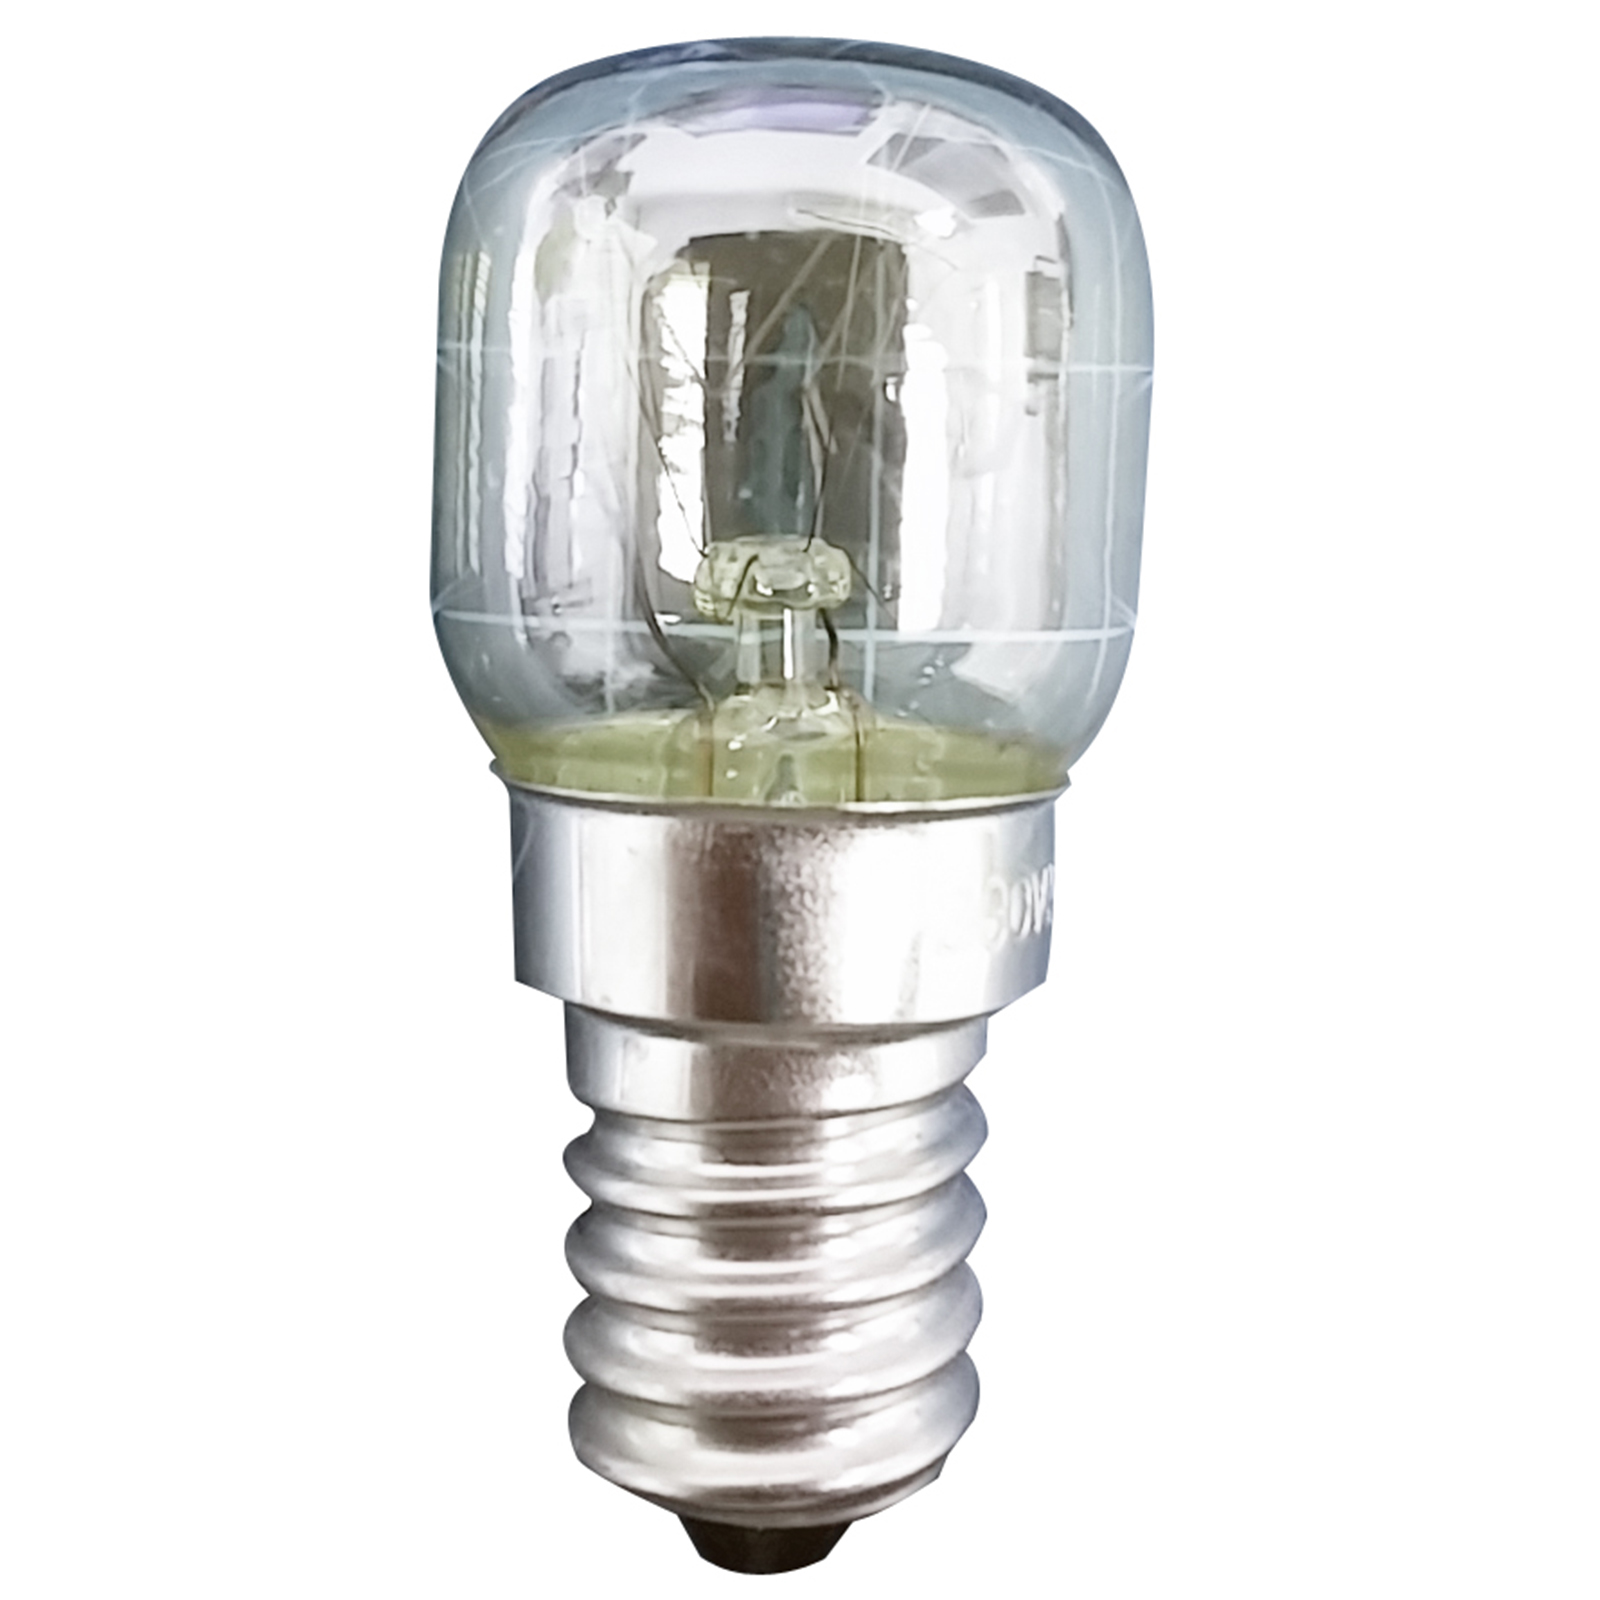 Halogen-Backofenlampe - E14 - 15 Watt | Online bei ROLLER kaufen